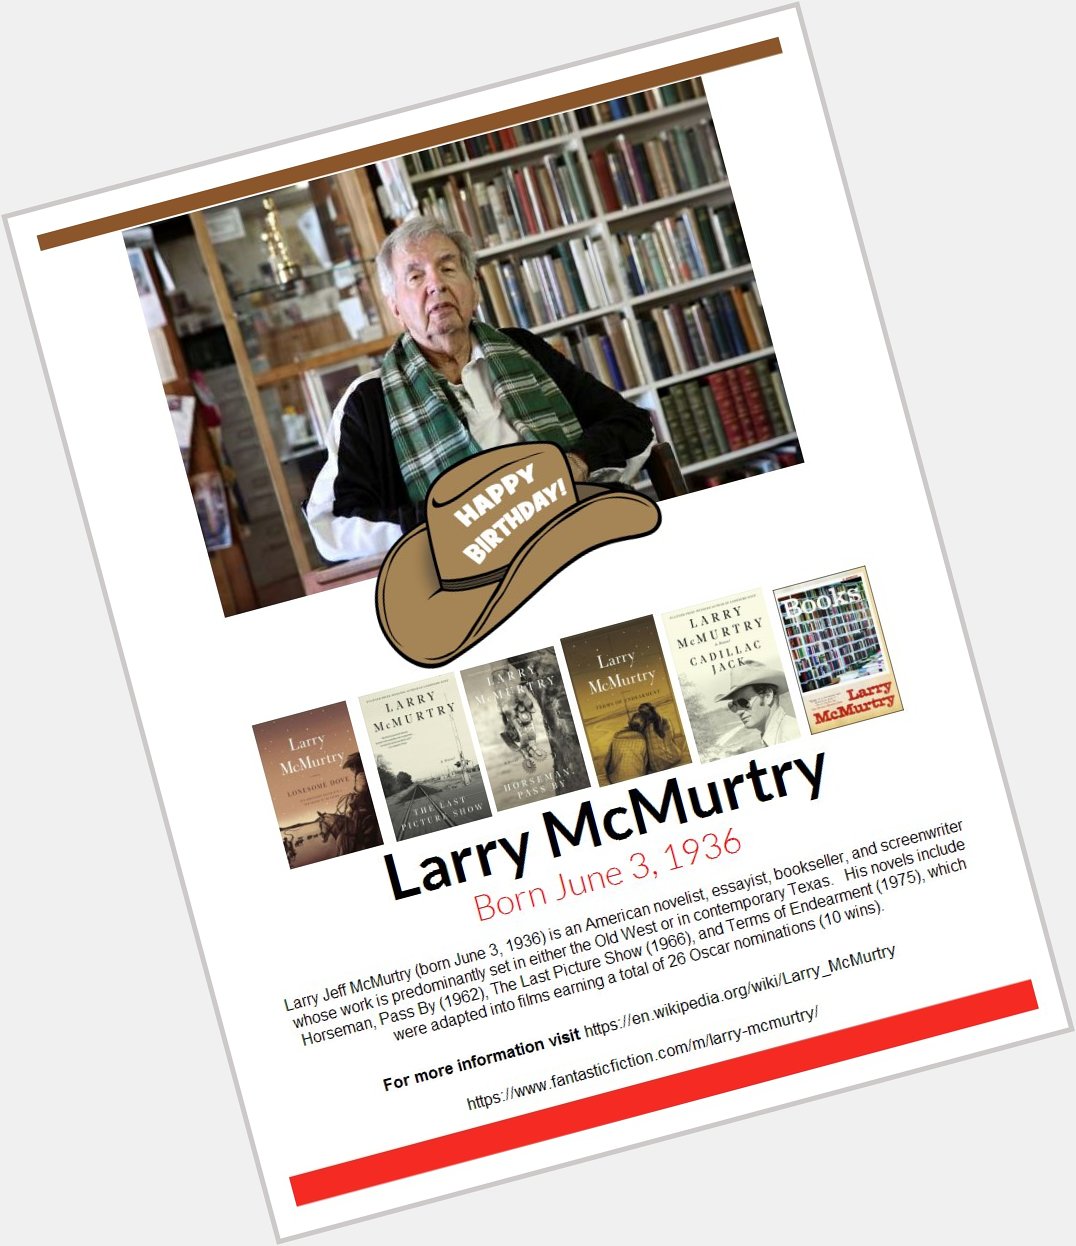 Happy Birthday Larry McMurtry!  